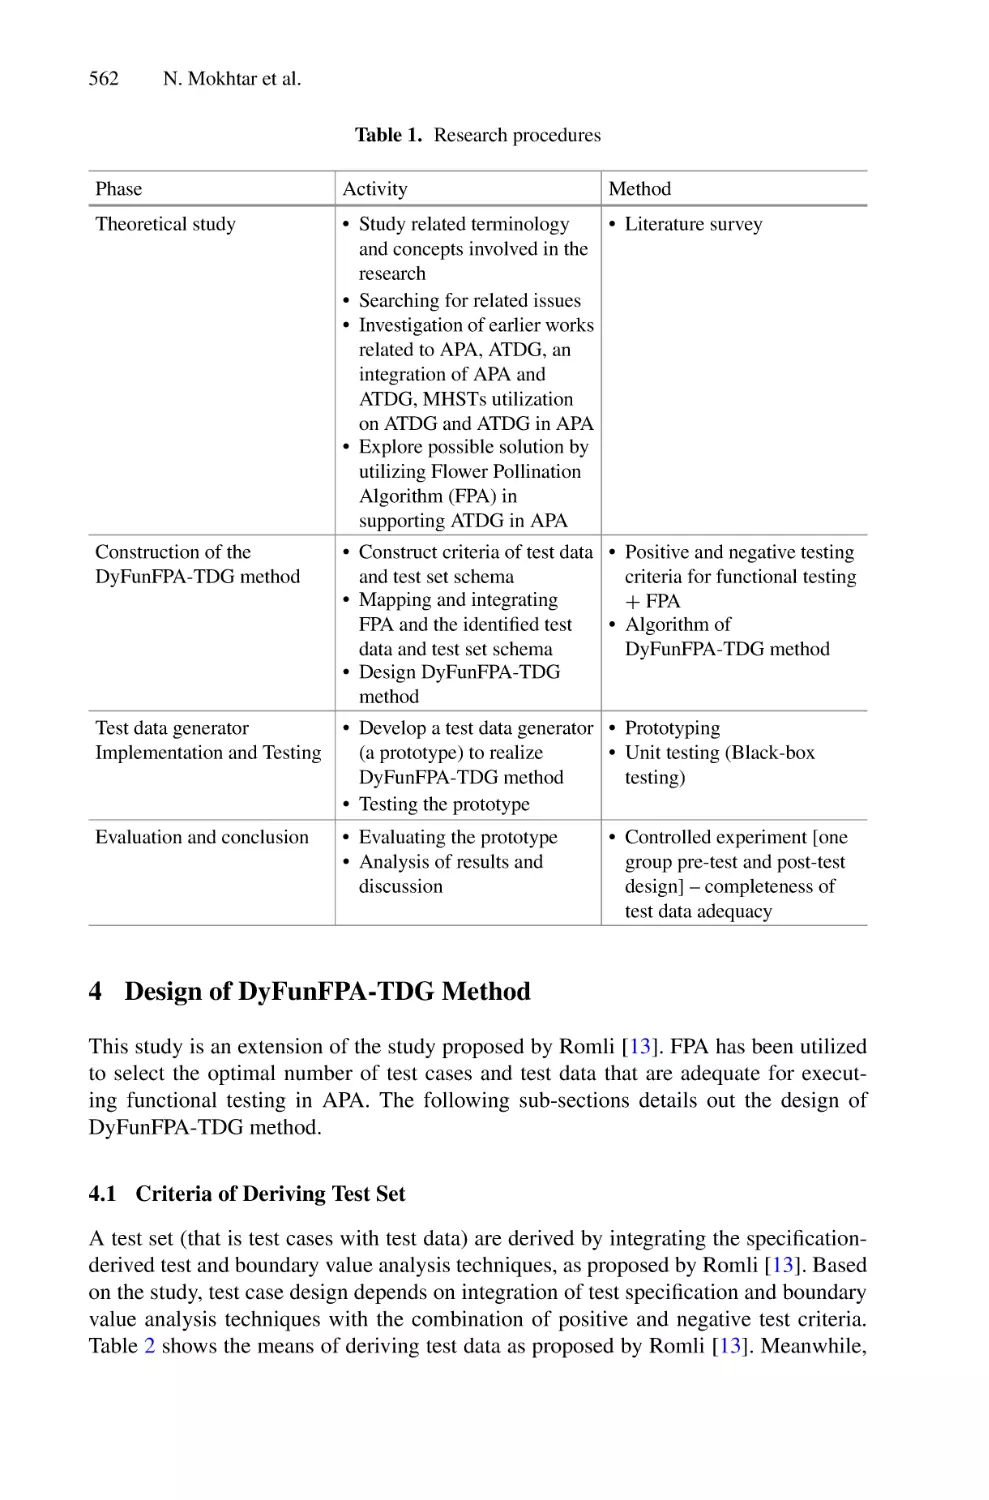 4 Design of DyFunFPA-TDG Method
4.1 Criteria of Deriving Test Set